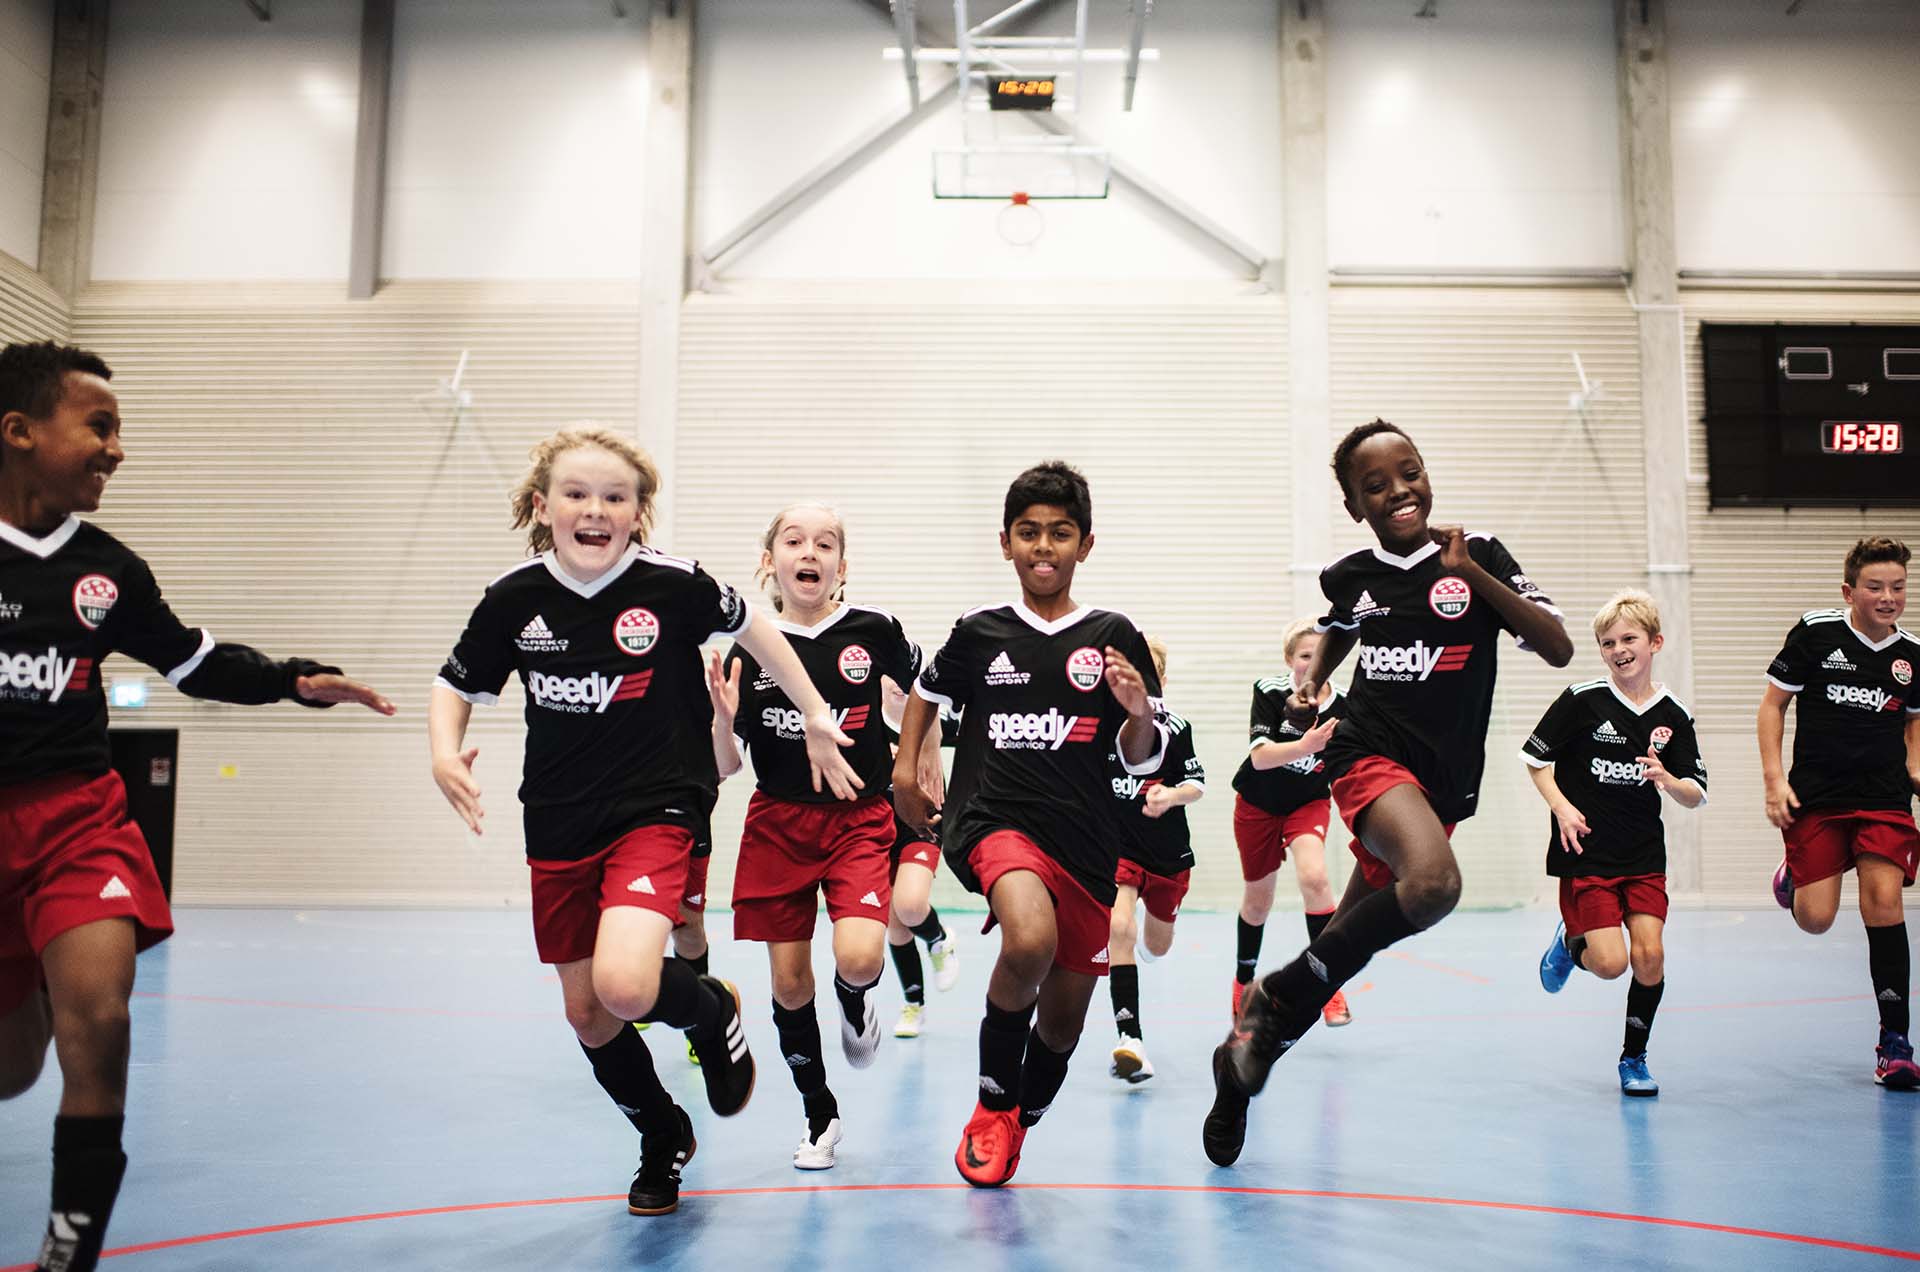 Barn i idrottskläder springer i sporthall.